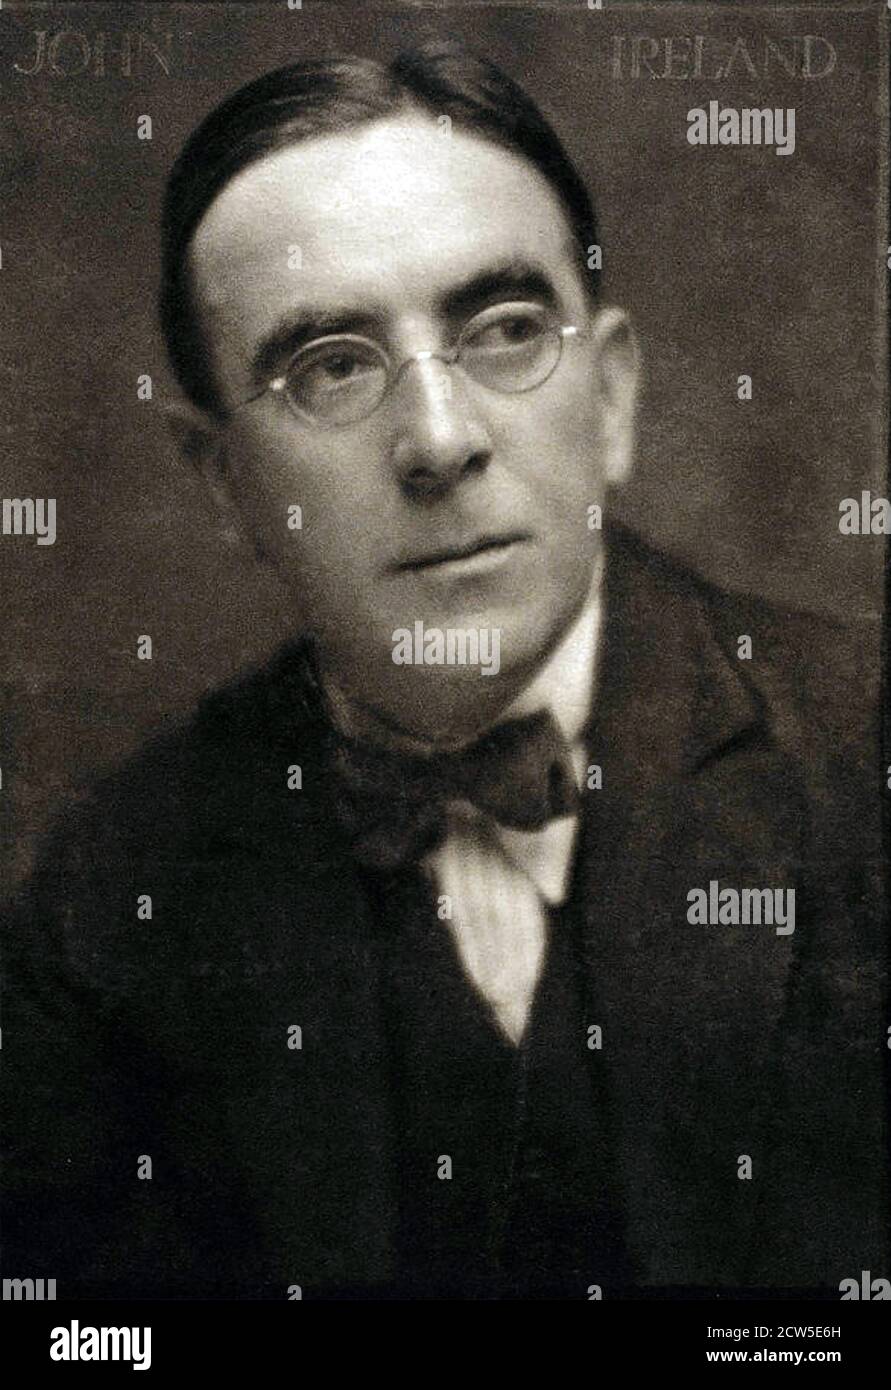 JOHN IRELAND (1879-1962) compositore inglese circa 1920 Foto Stock